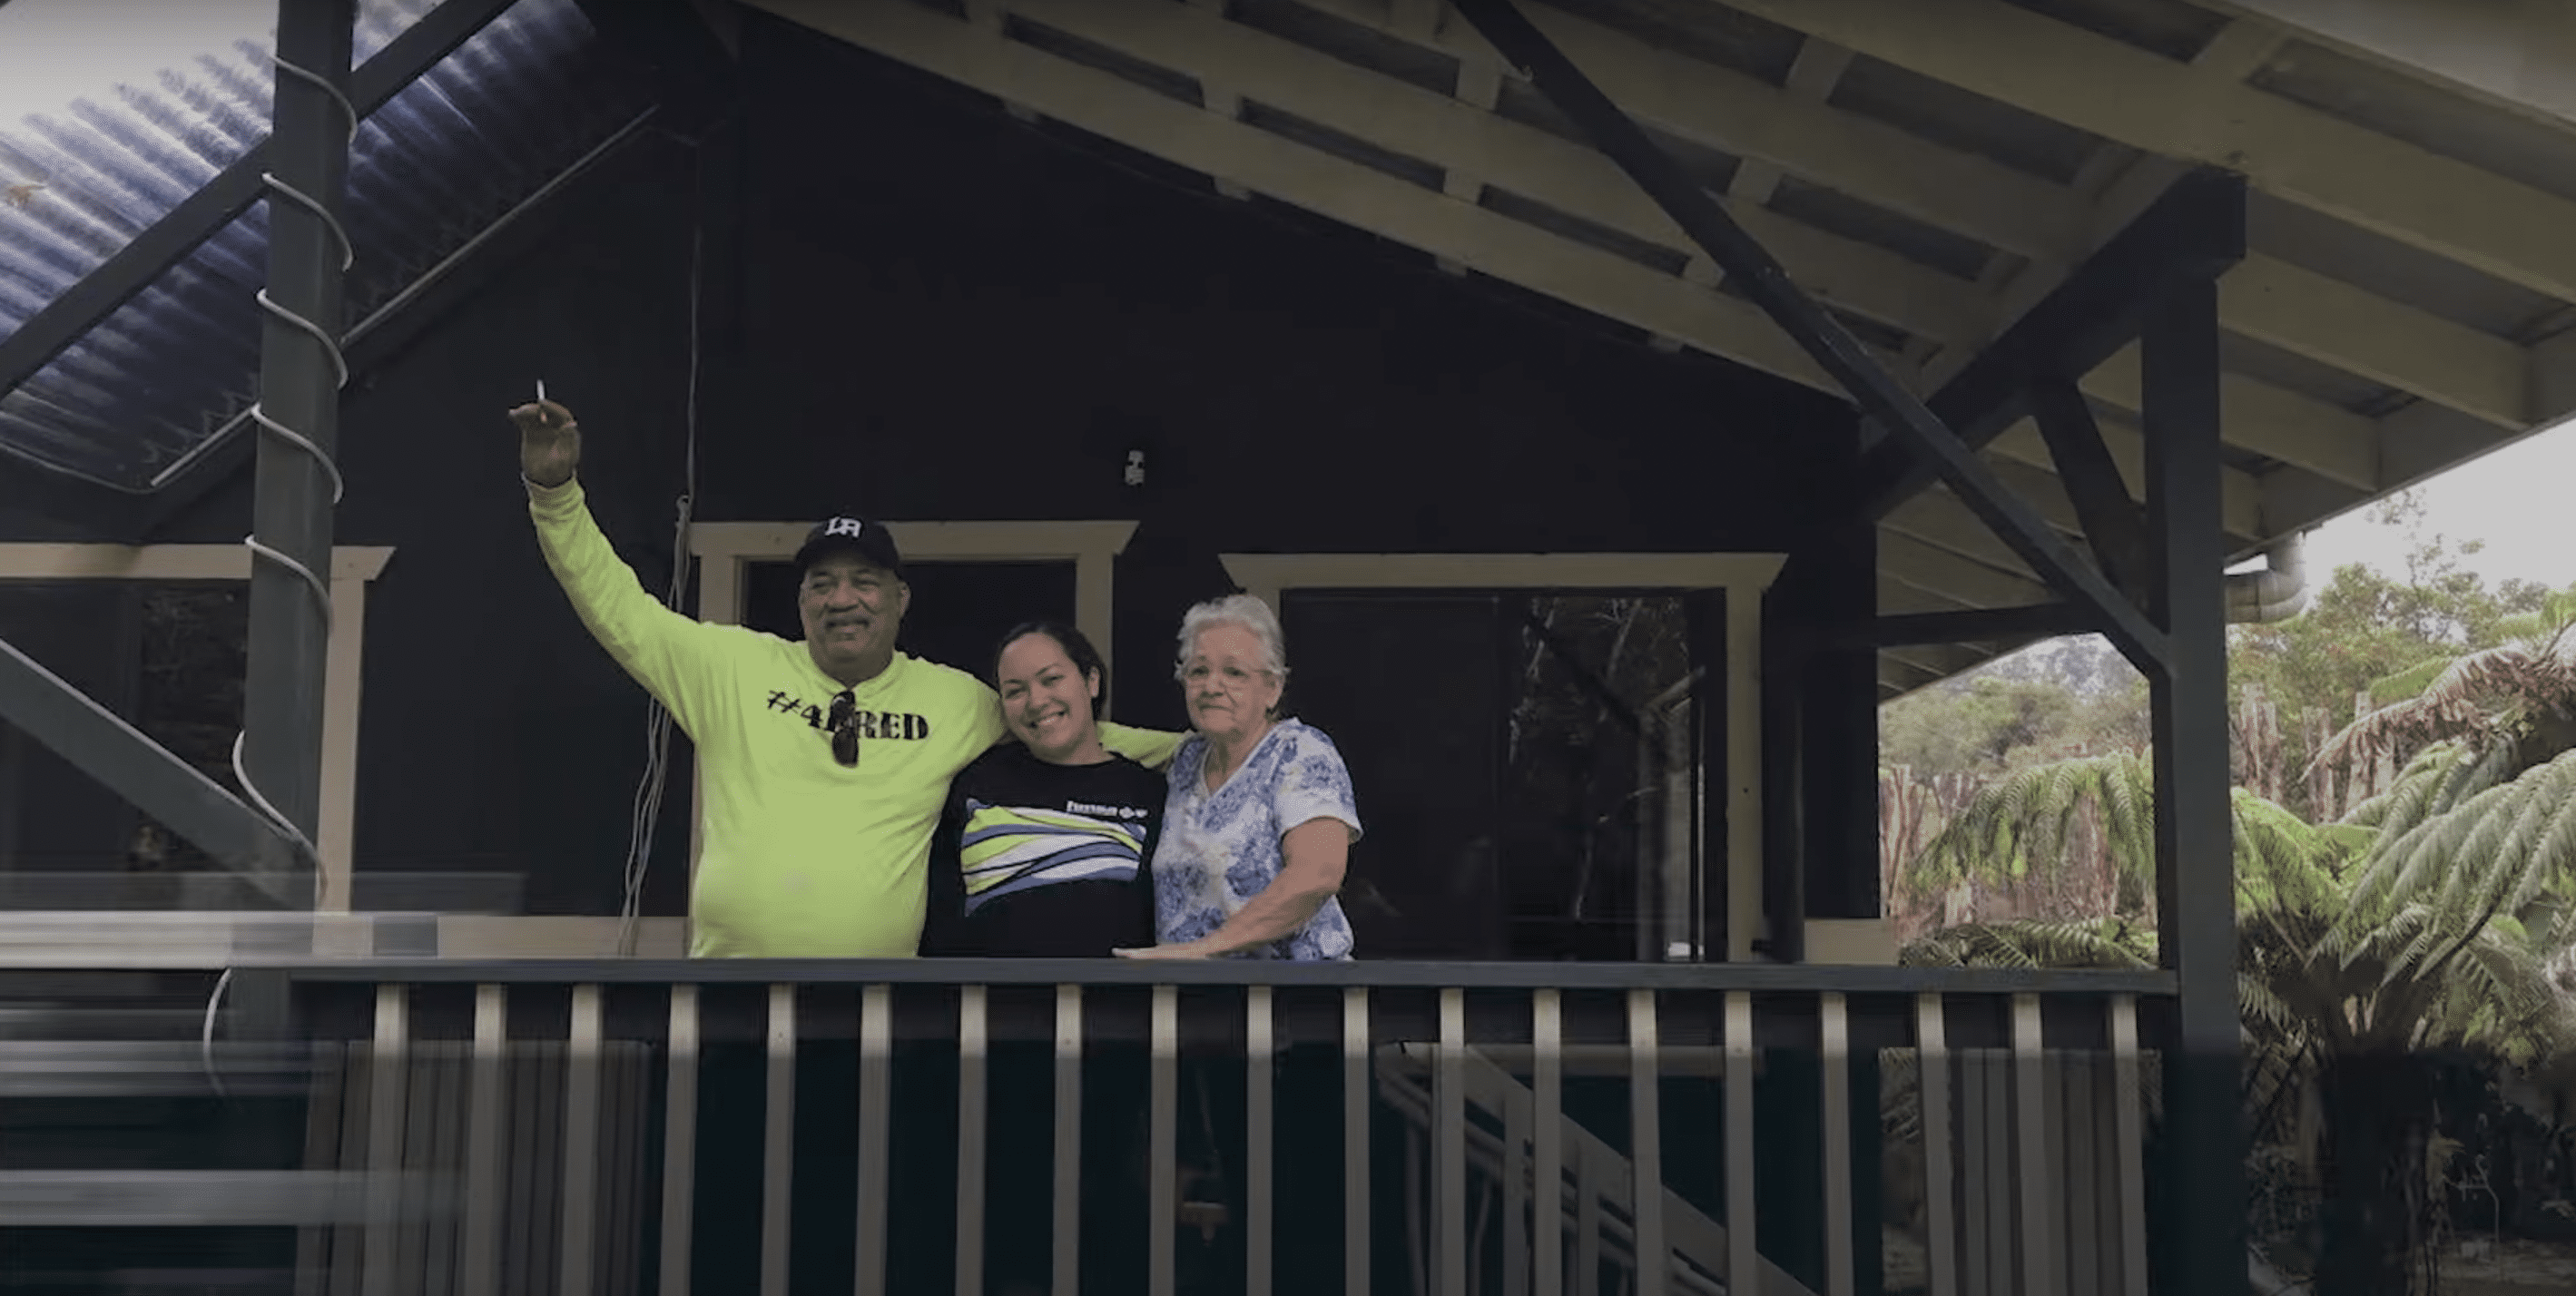 [From left to right] Grandpa, Kahealani Paradis, and grandma. | Source: YouTube.com/New York Post